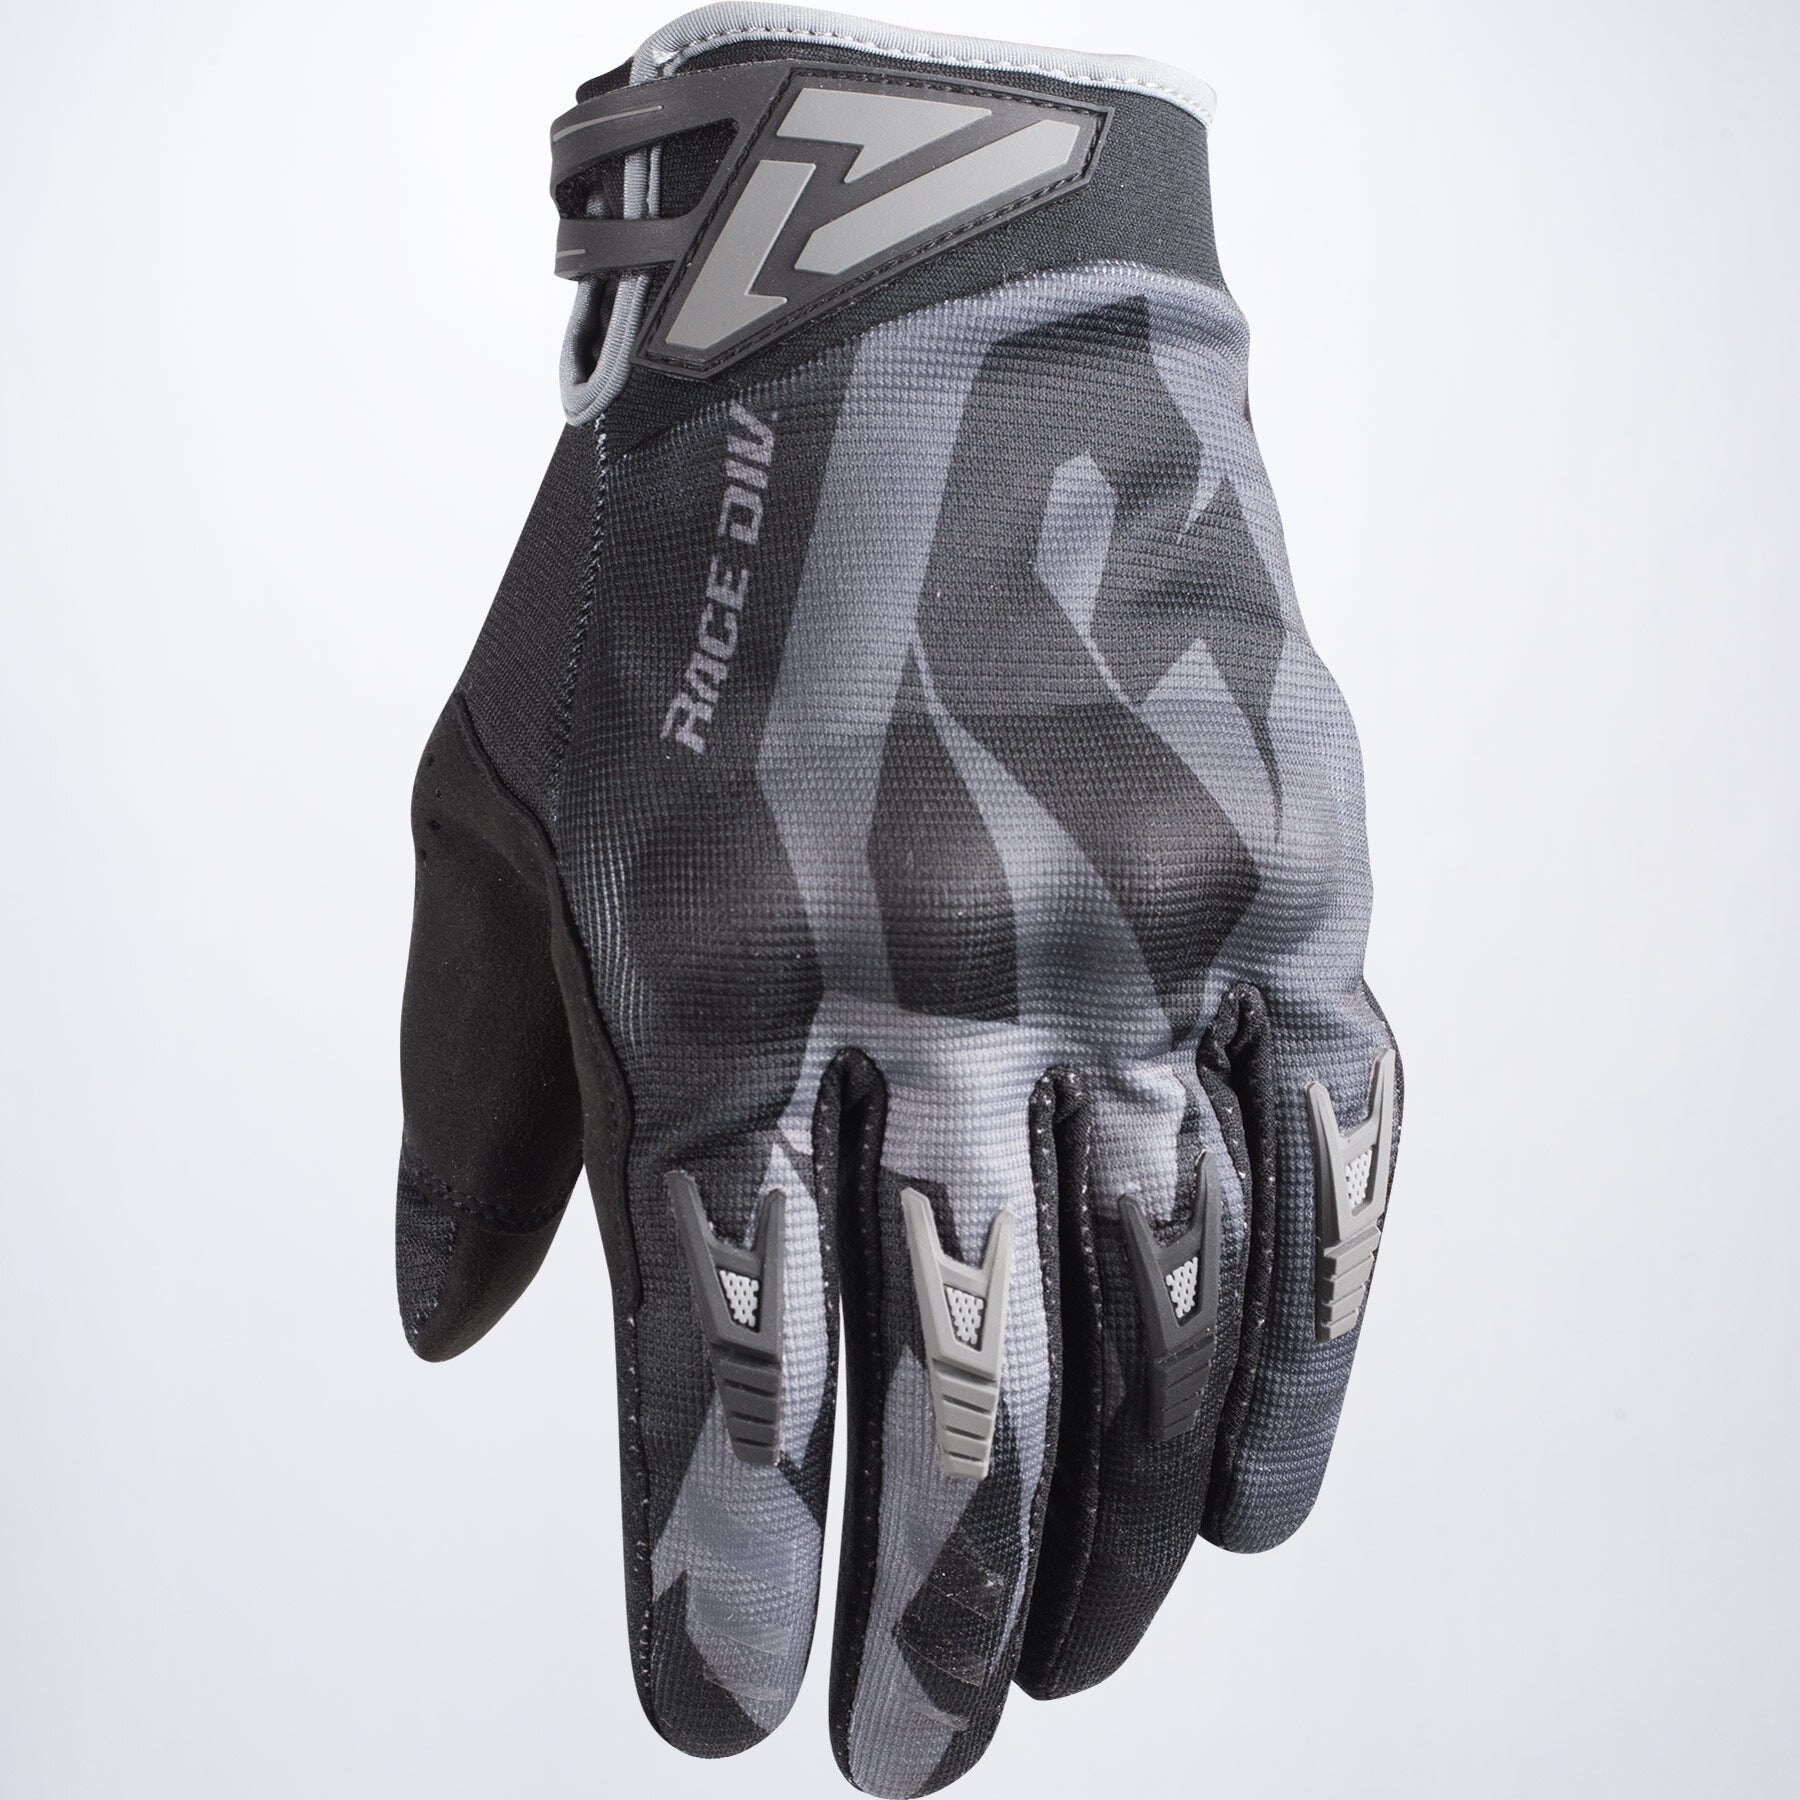 Factory Ride Adjustable Armor MX Glove